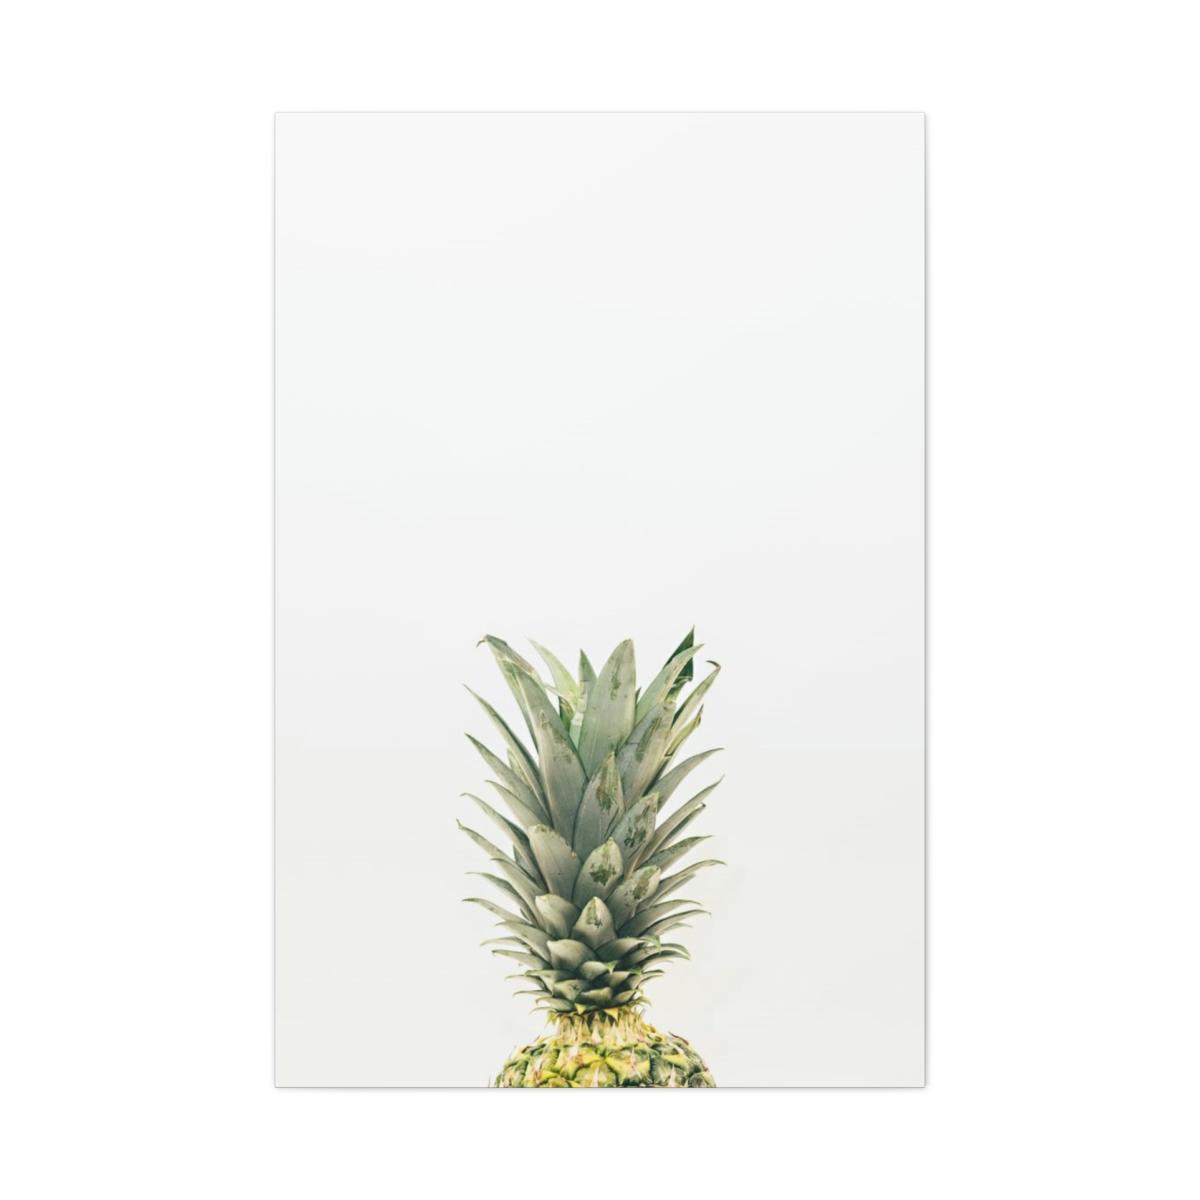 Pineapple art